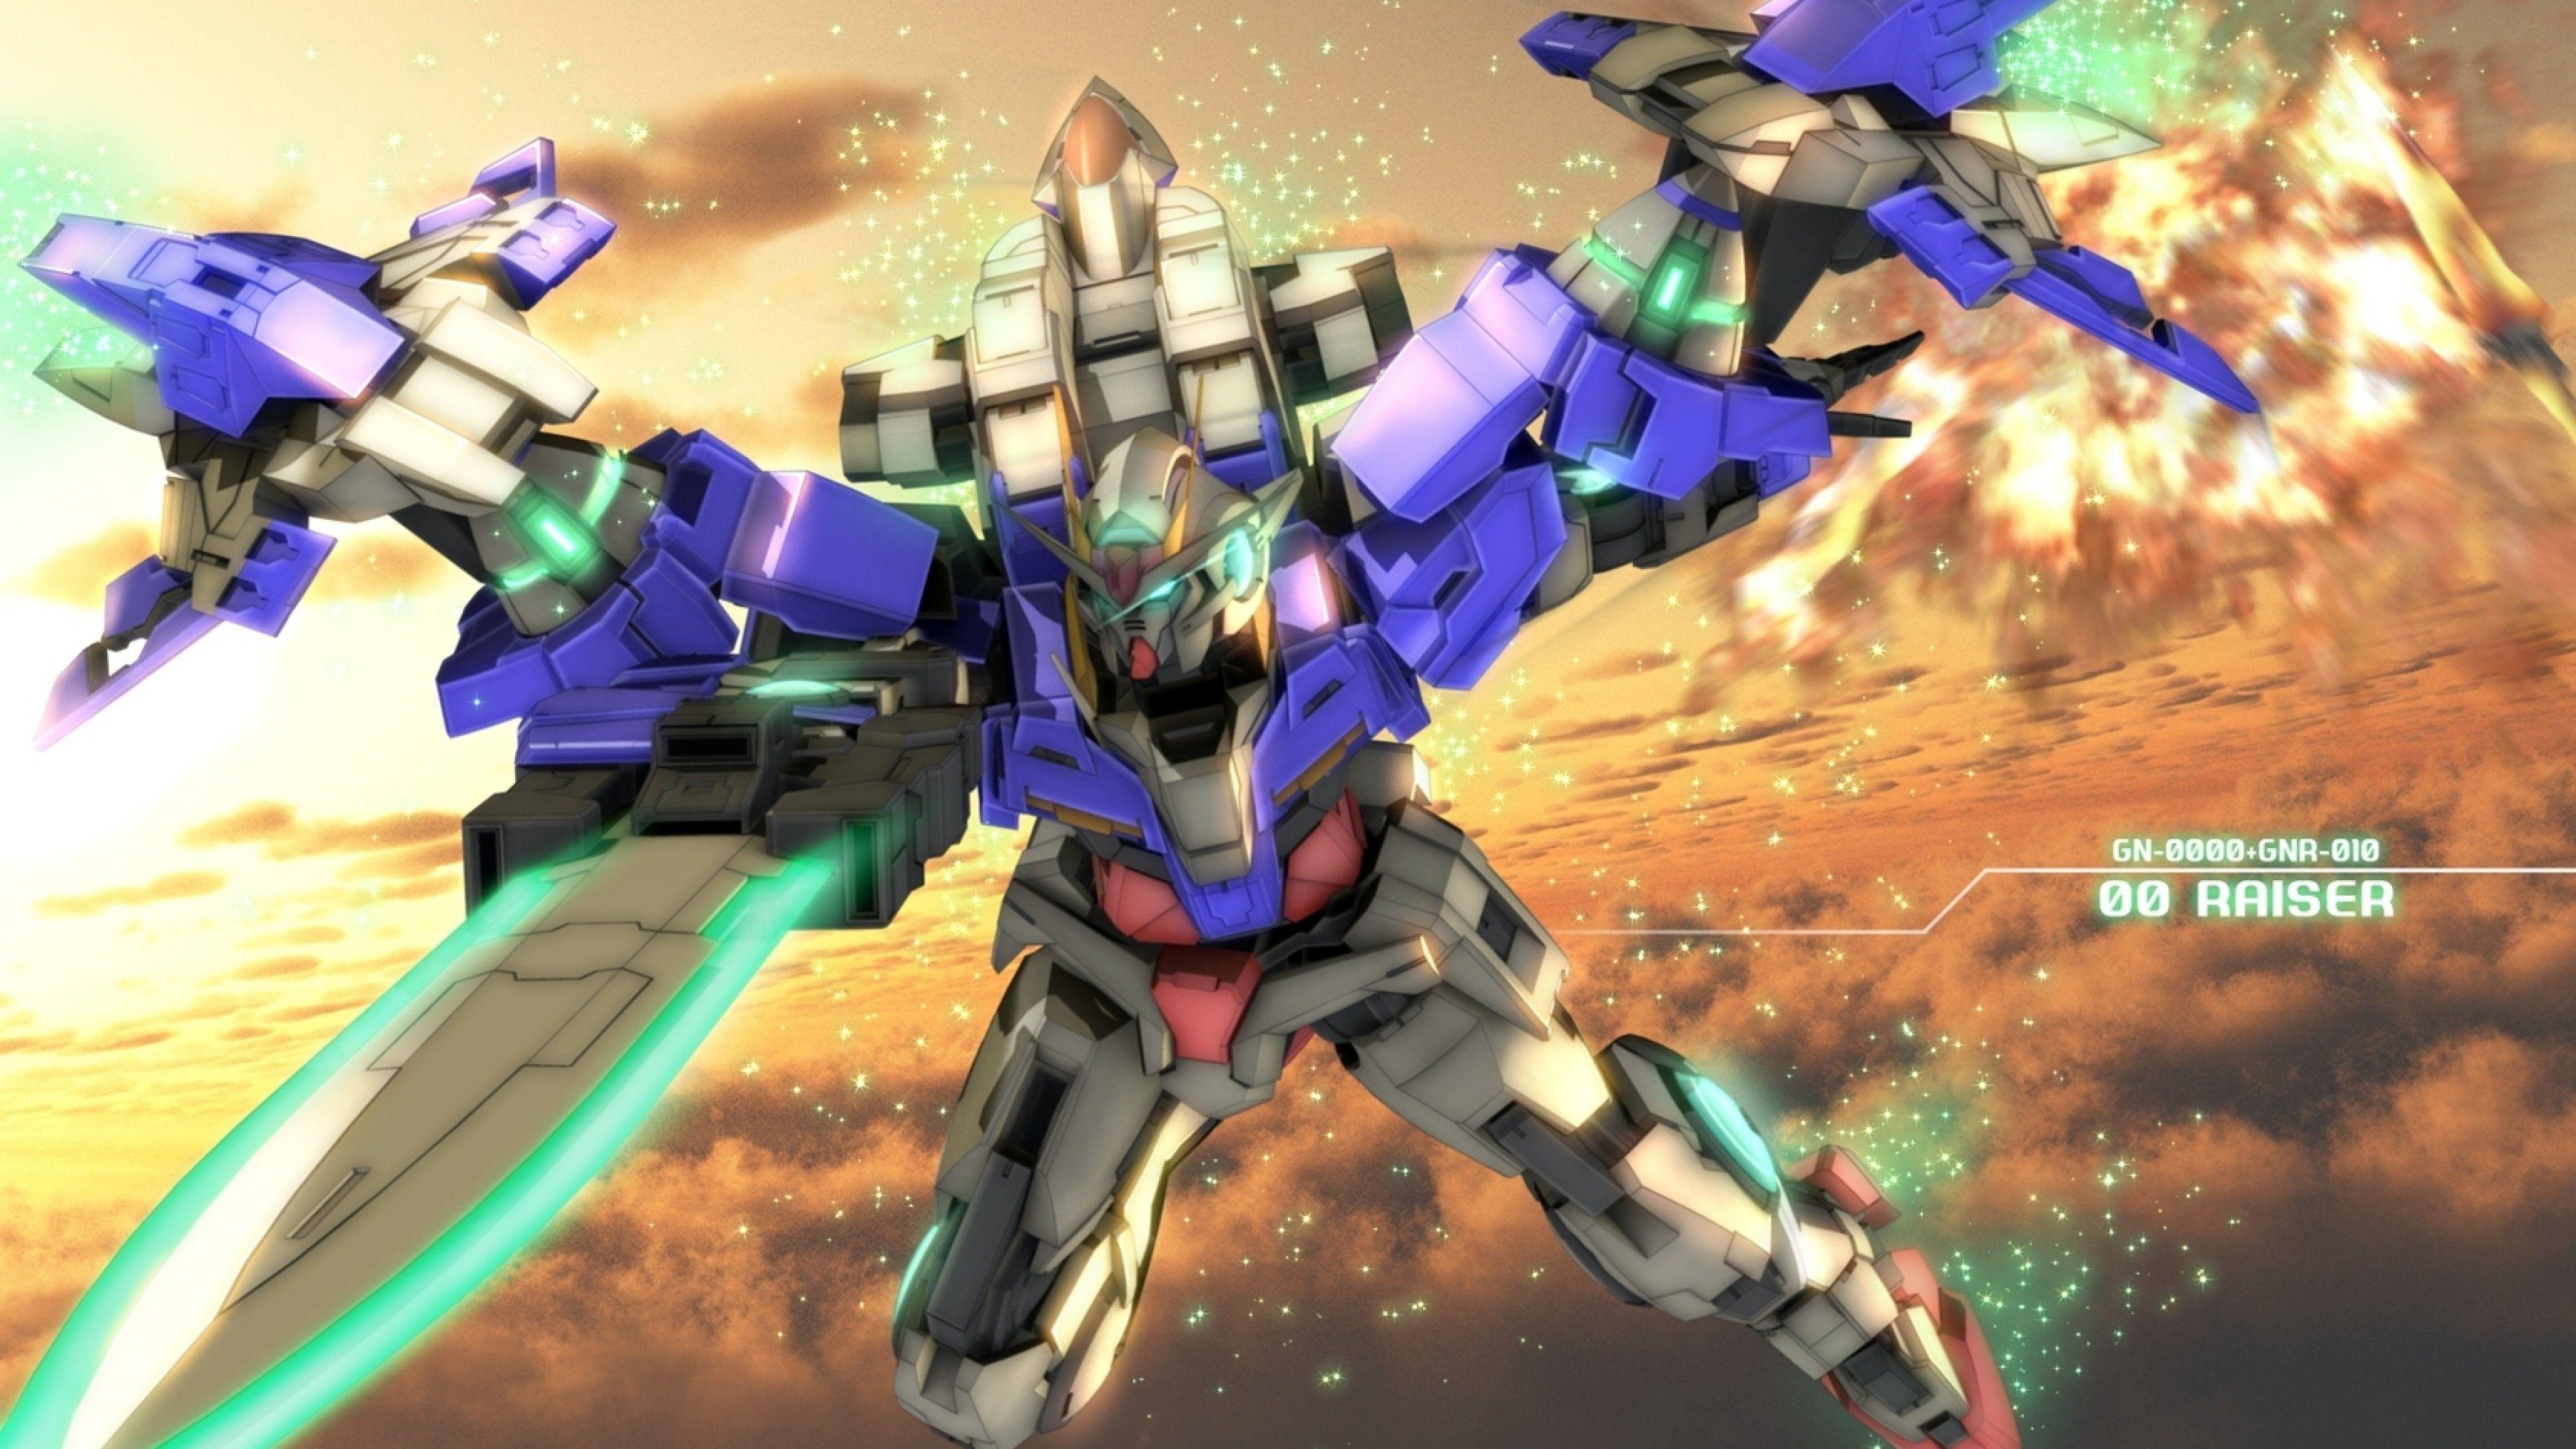 Download 3840x2160 Mobile Suit Gundam, Mecha, Robot, 00 Raiser